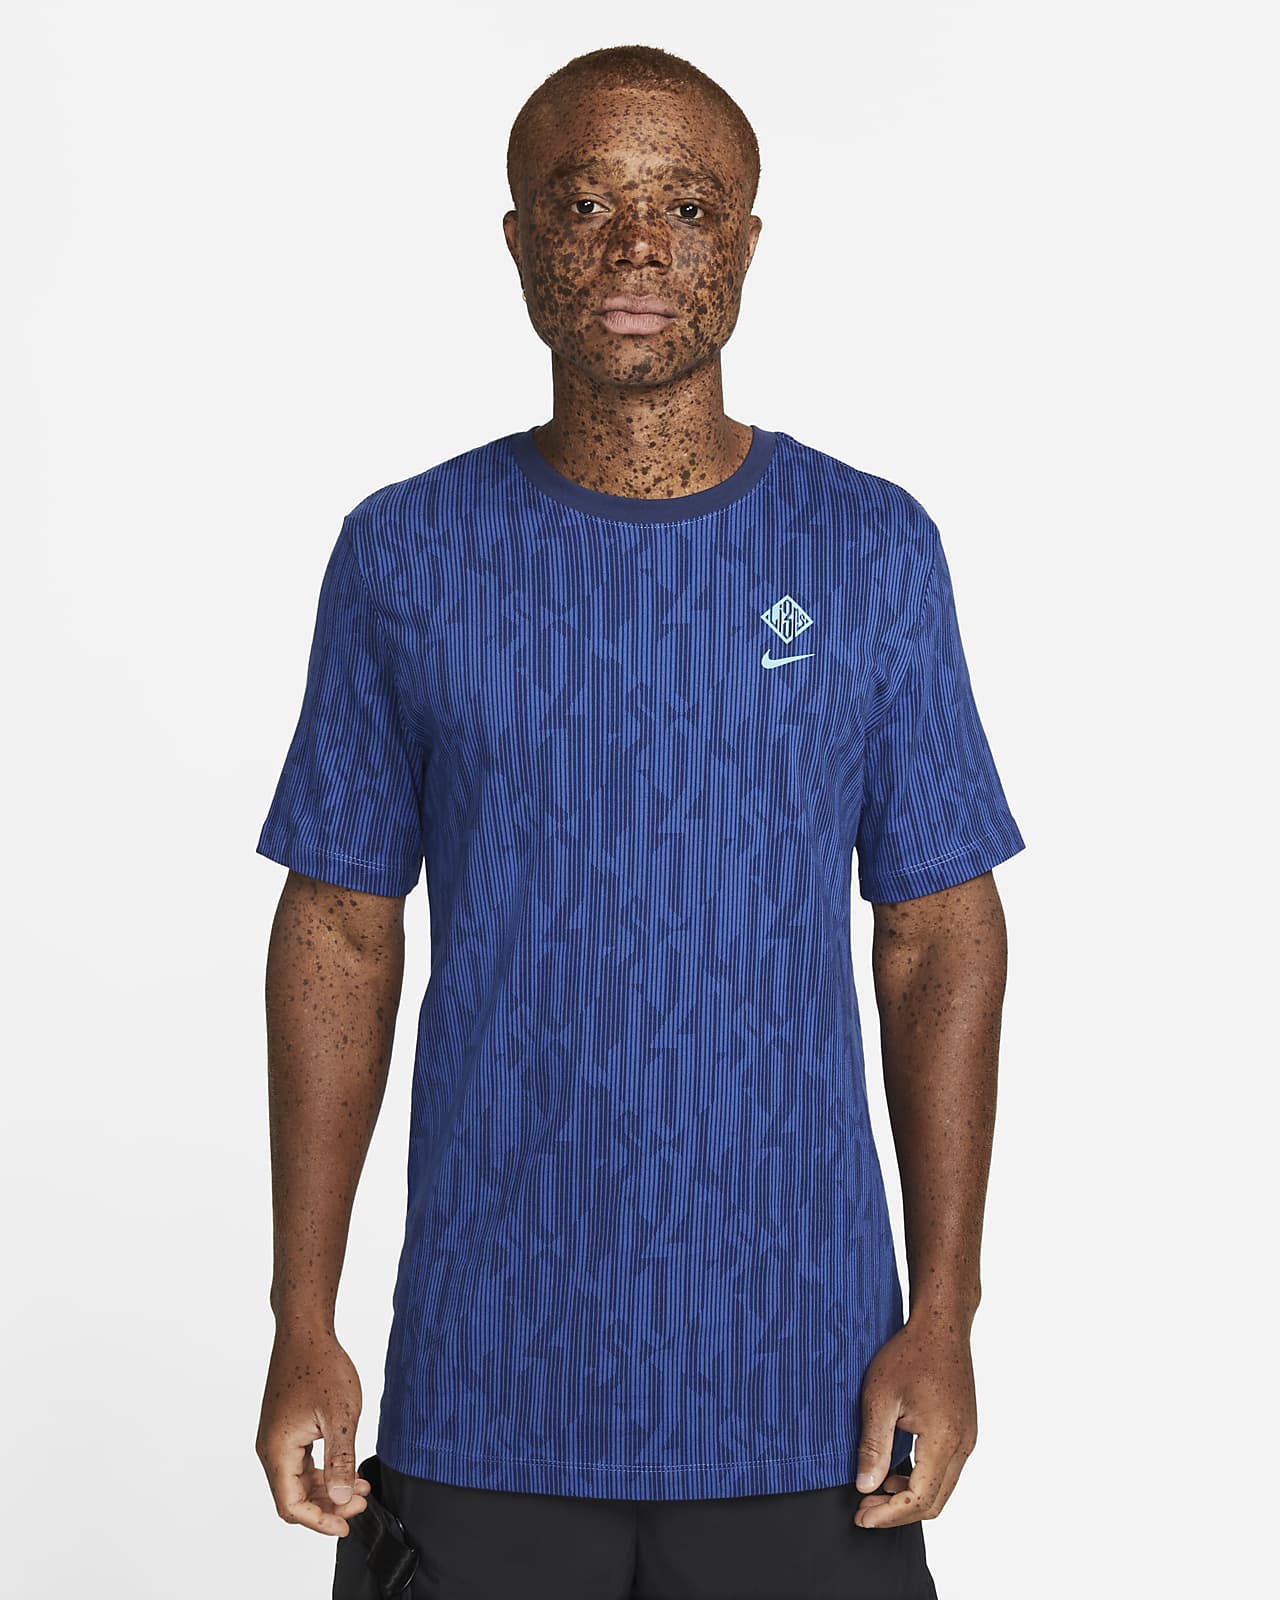 England Men's Nike Ignite T-Shirt